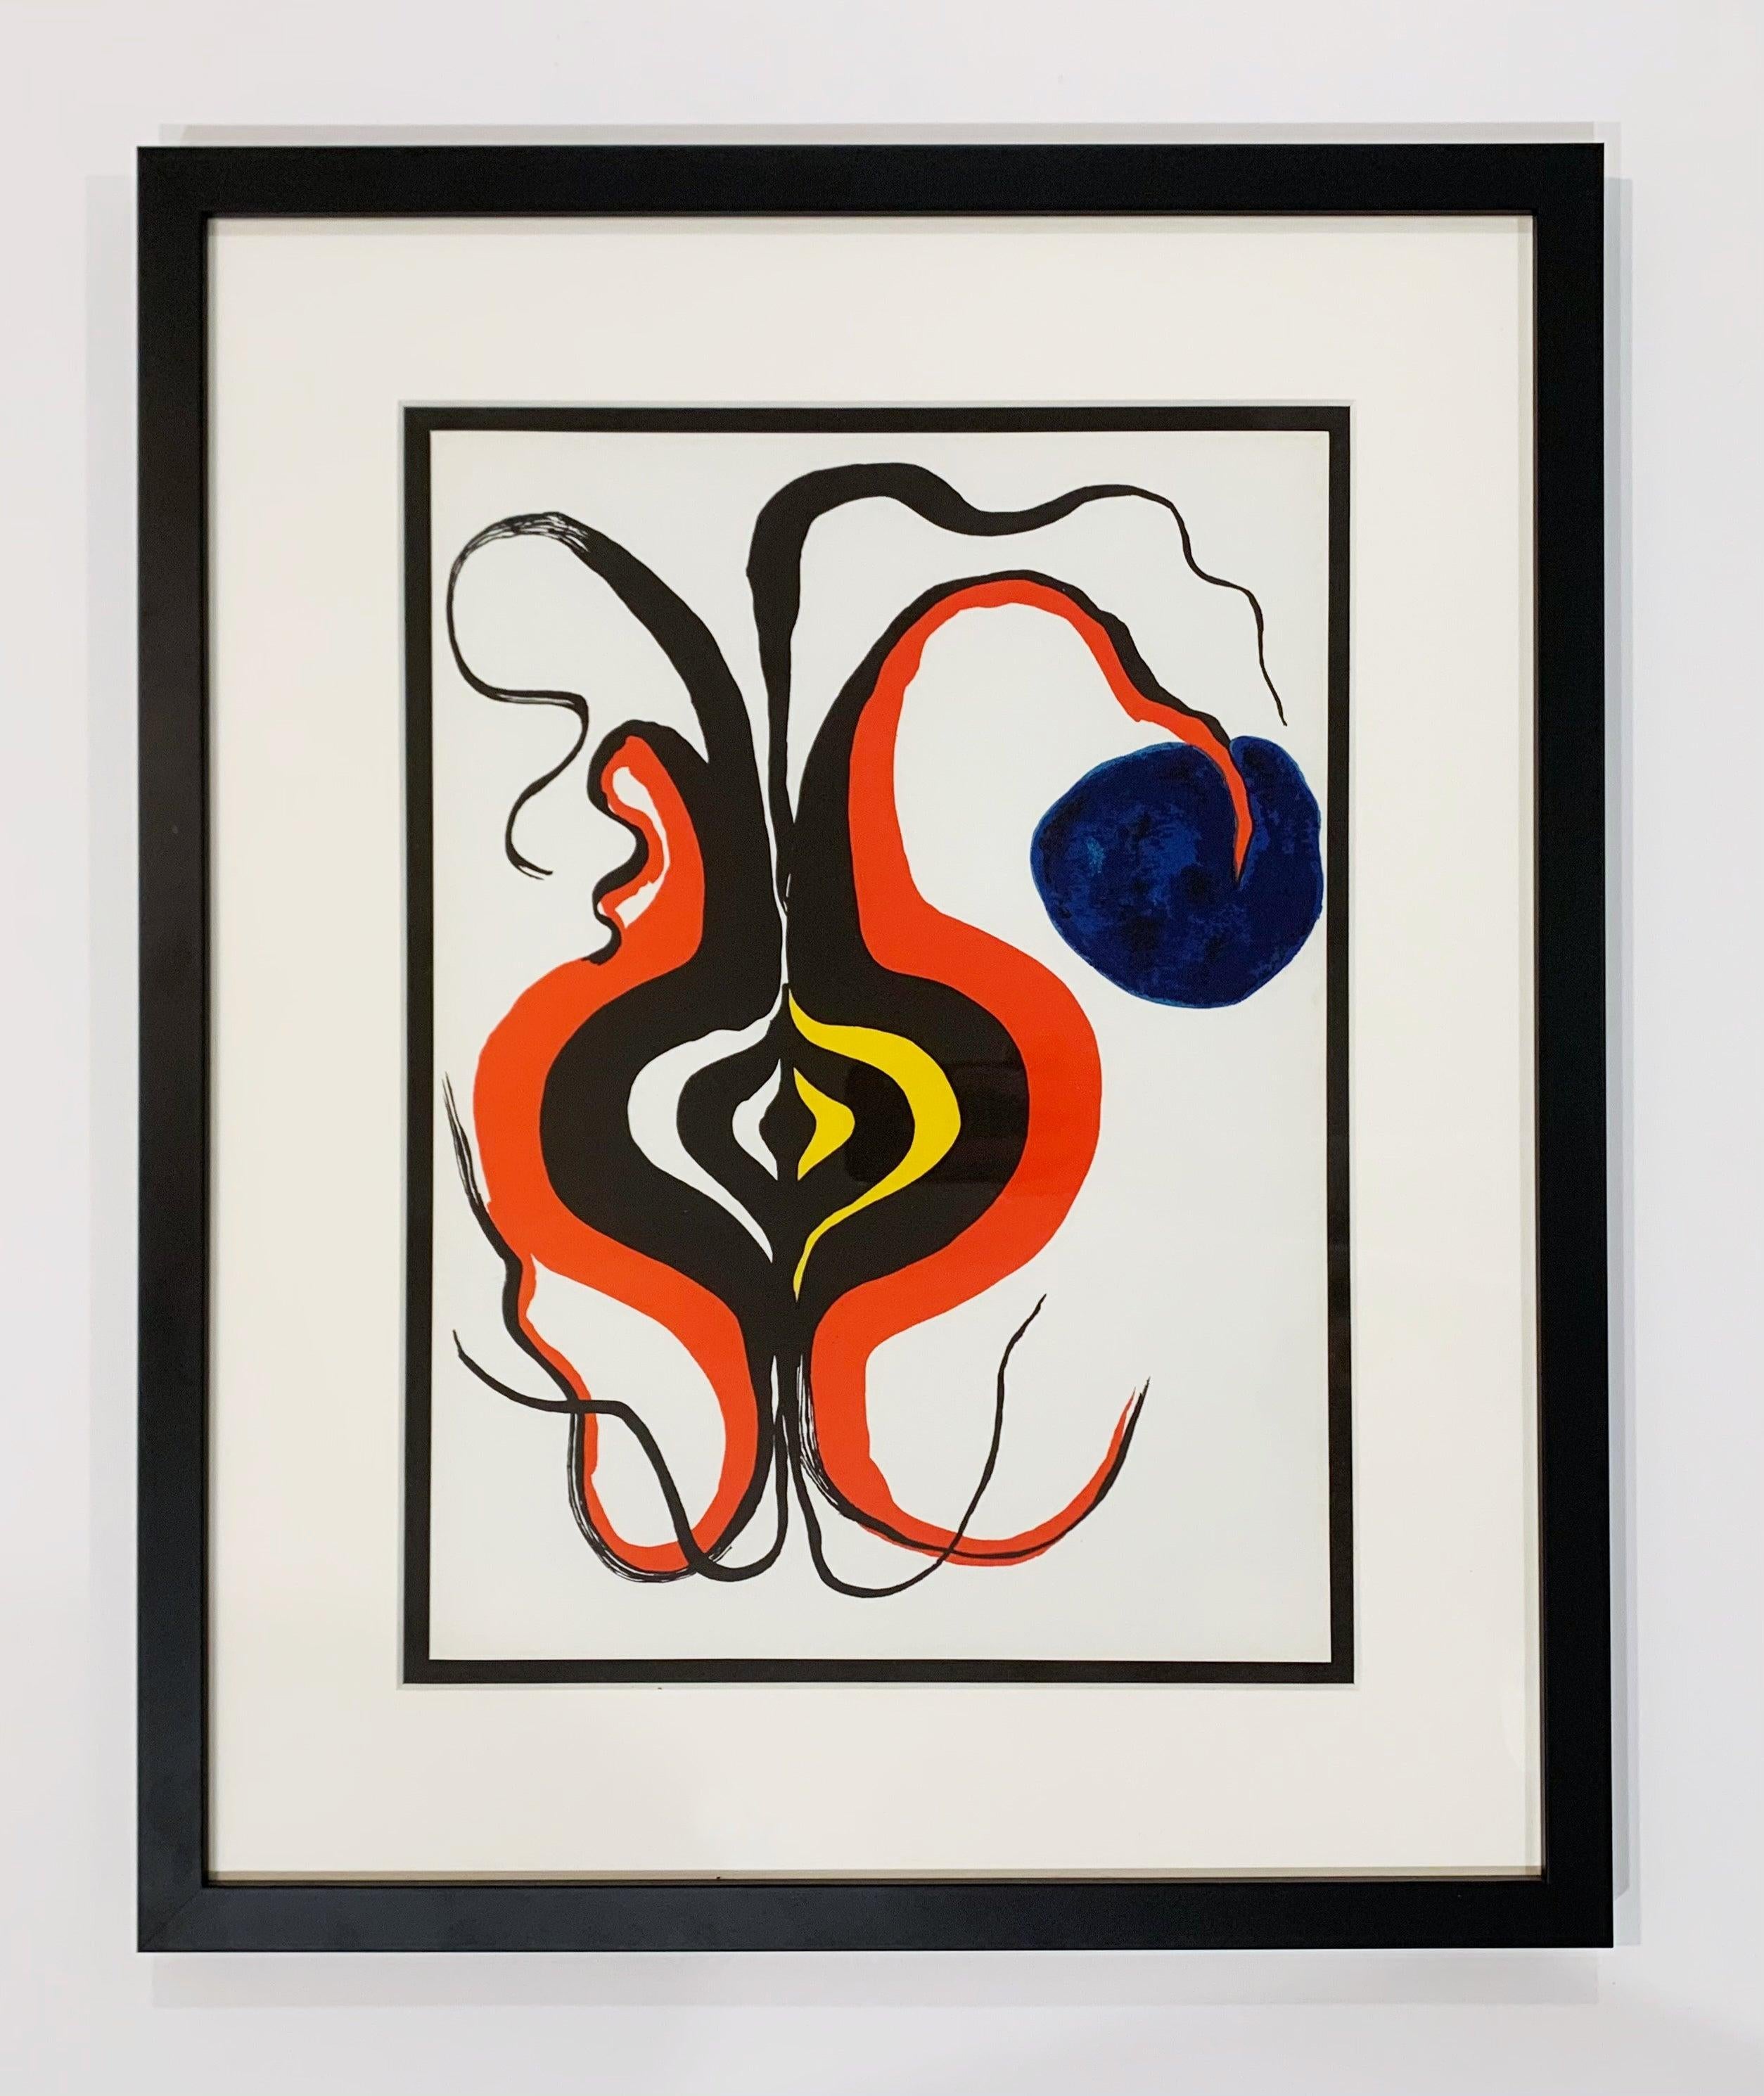 Plate 6, from Derriere Le Miroir #156 - Print by Alexander Calder